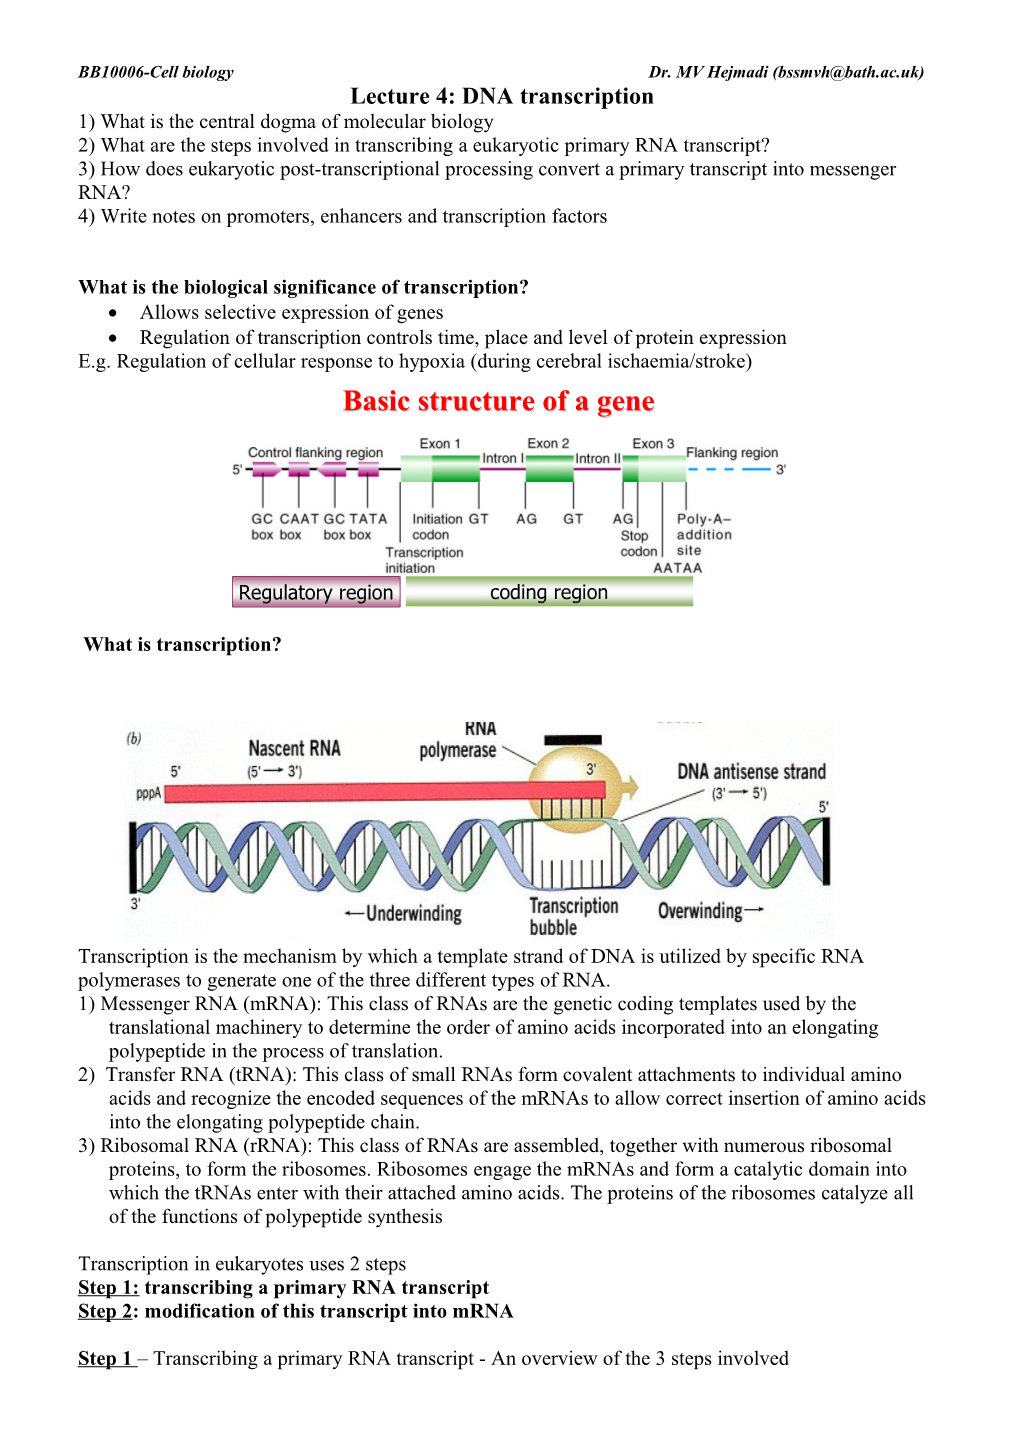 Lecture 4: DNA Transcription